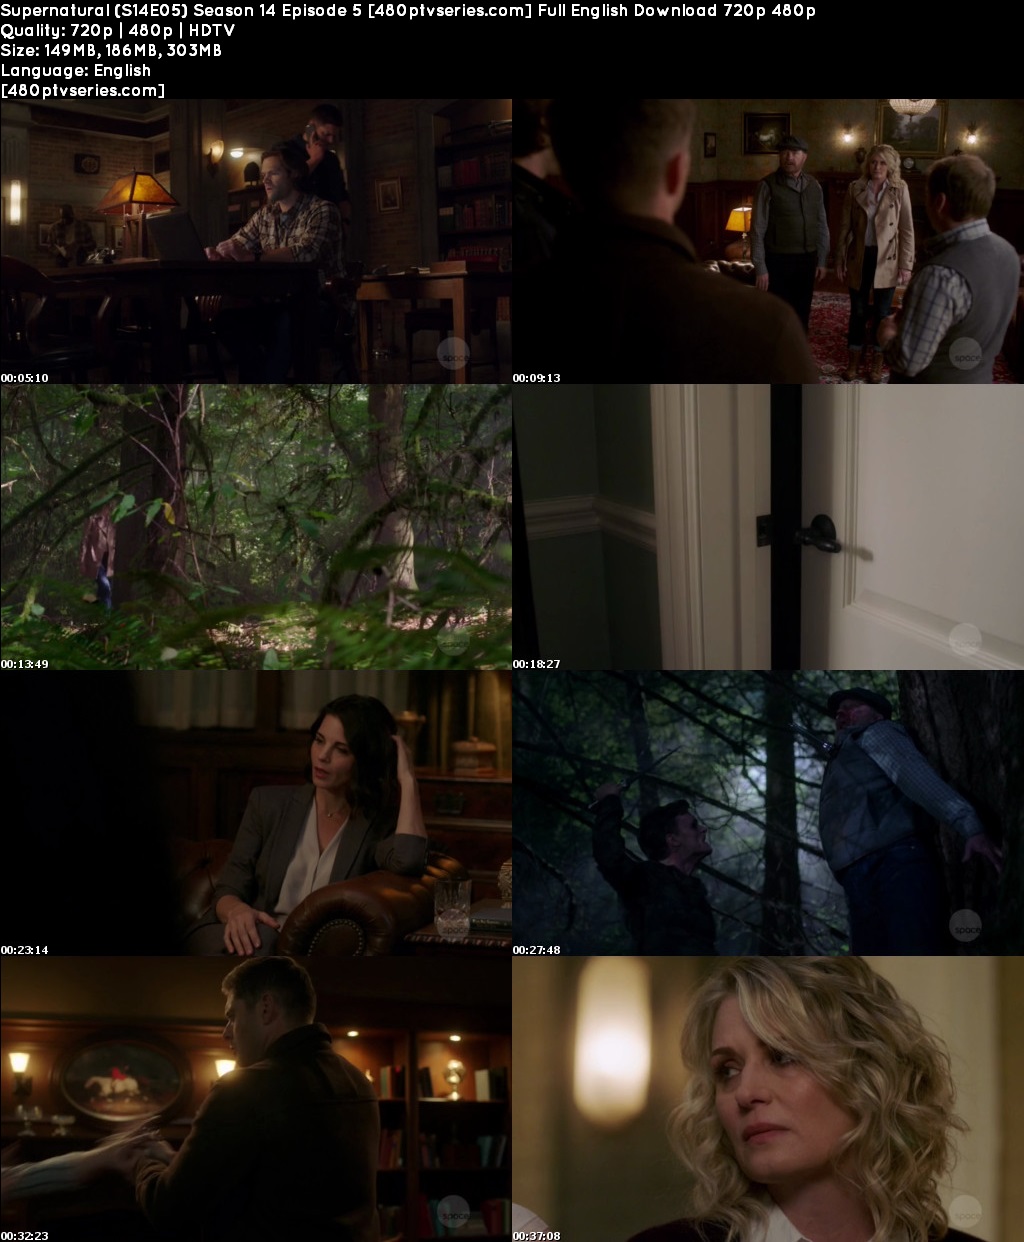 Supernatural (S14E05) Season 14 Episode 5 Full English Download 720p 480p